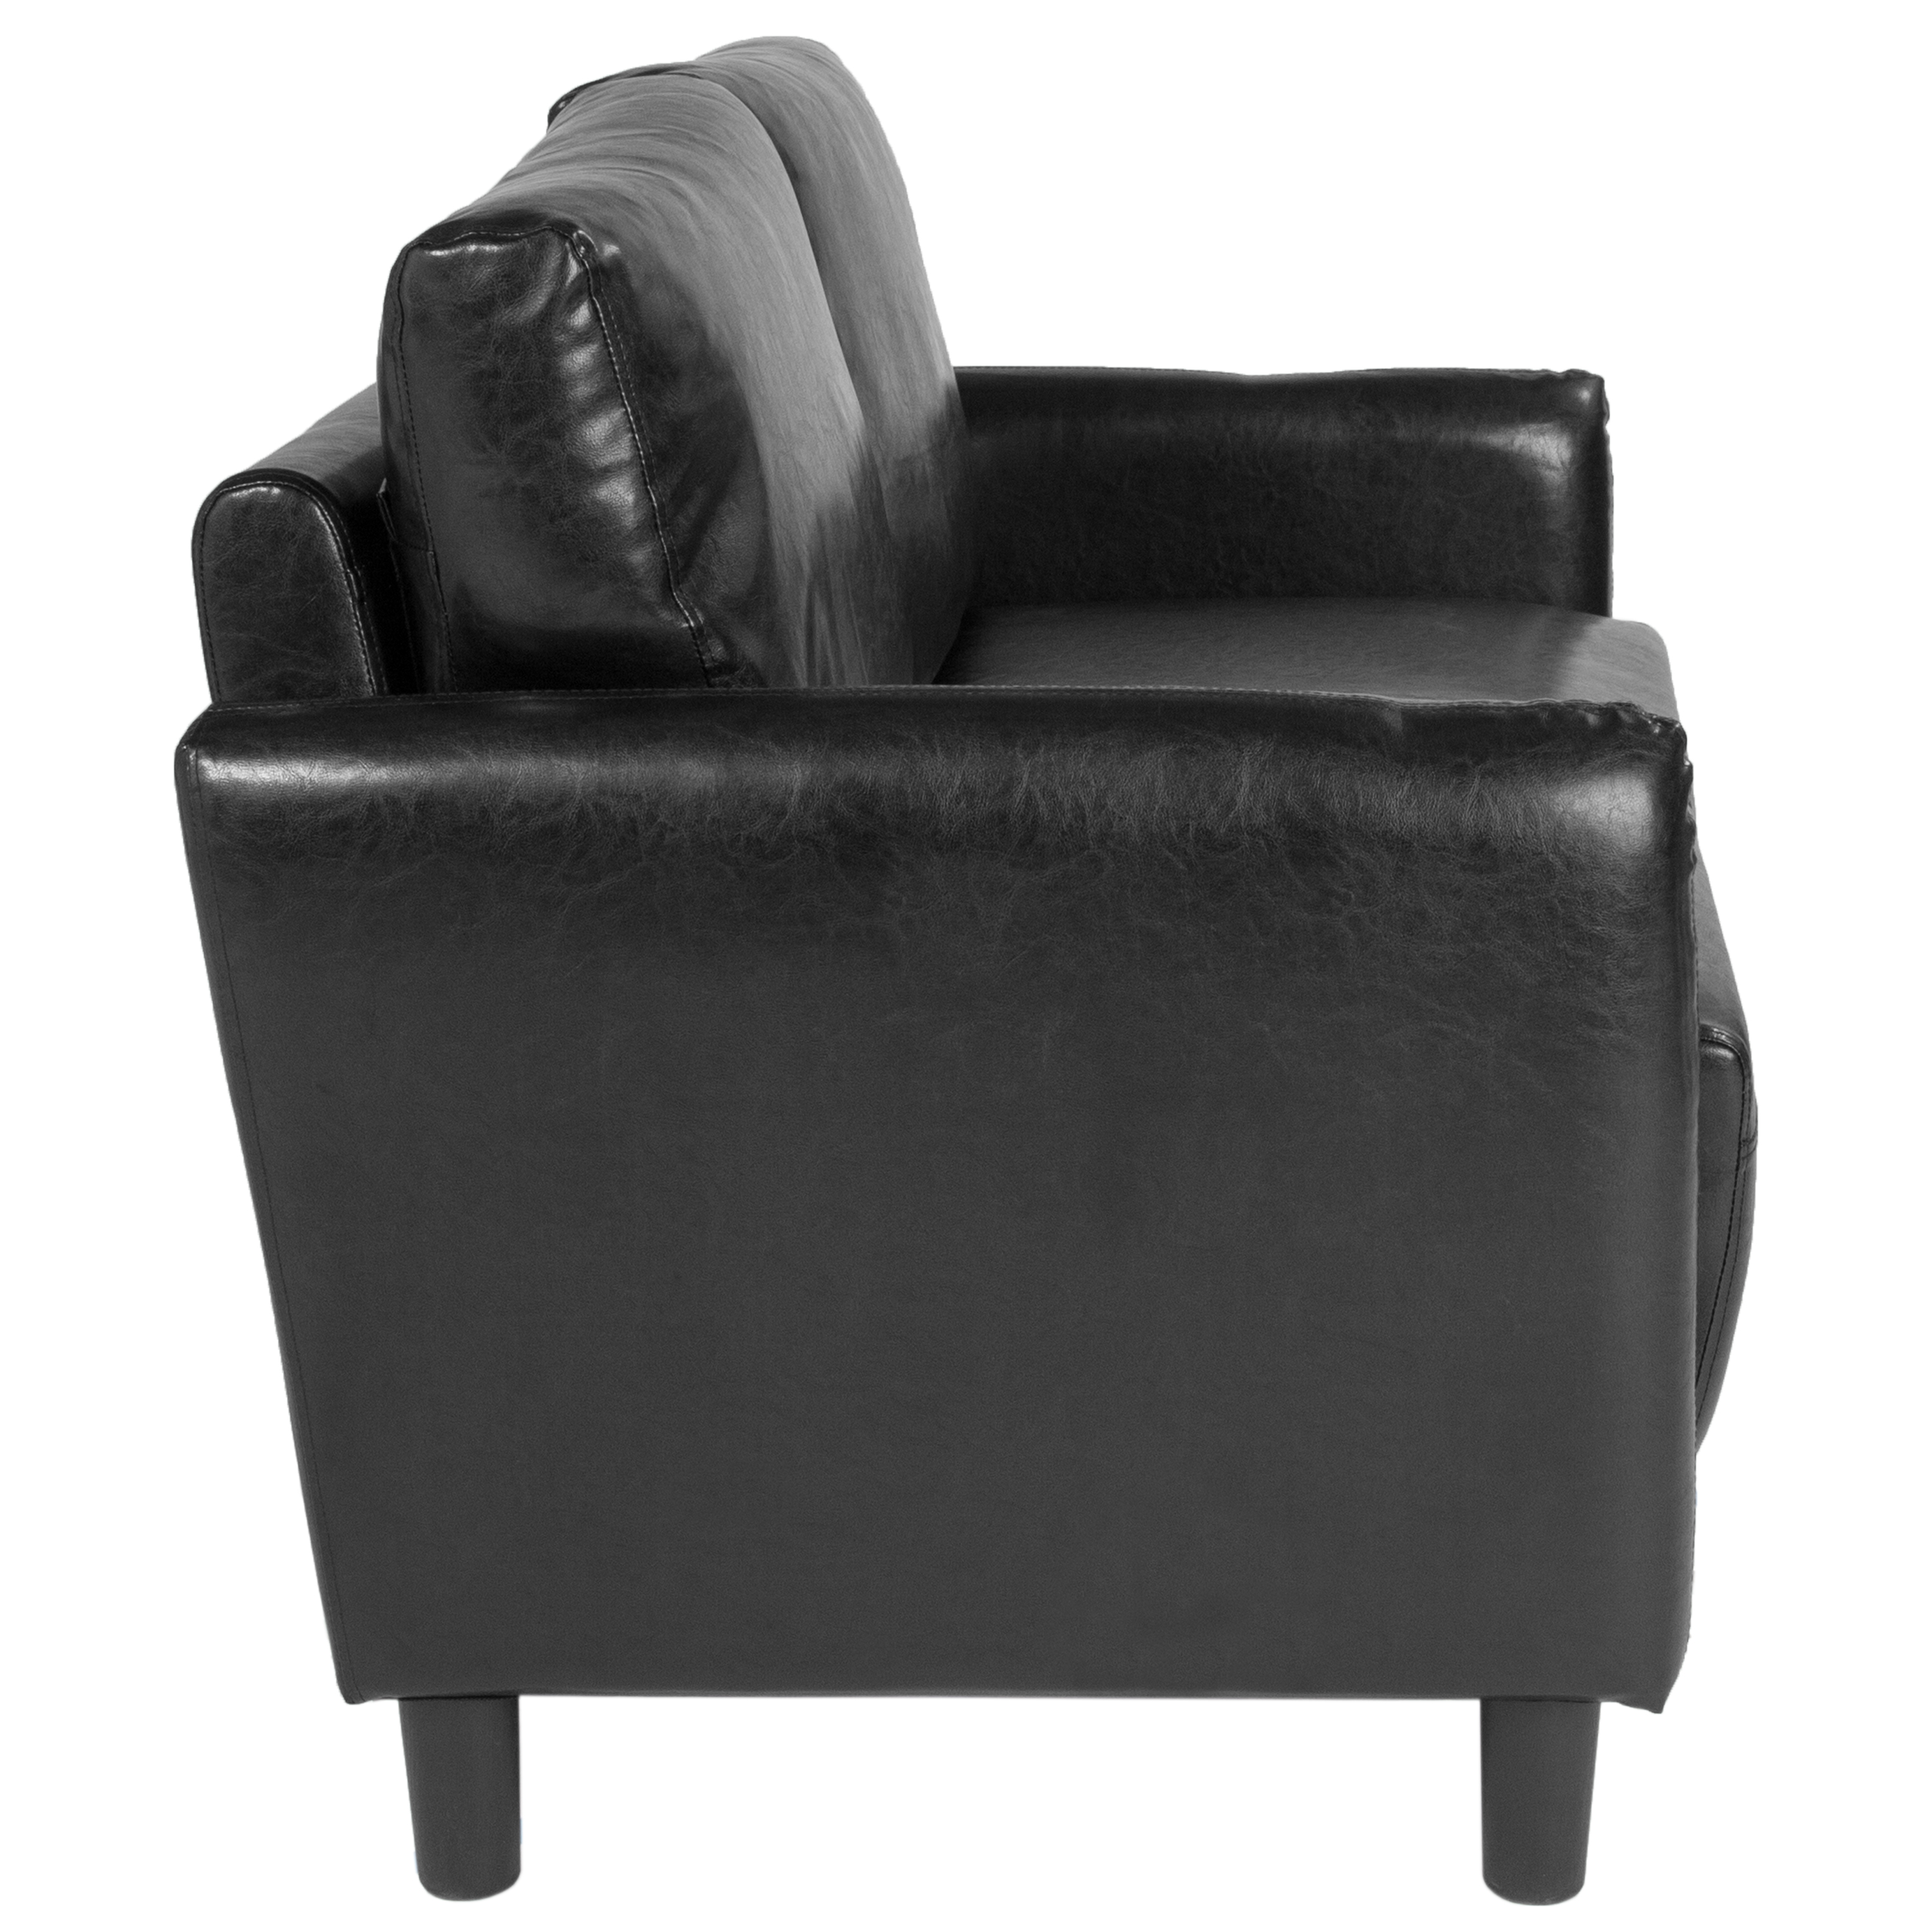 Flash Furniture Candler Park Upholstered Loveseat in Black LeatherSoft - image 4 of 5